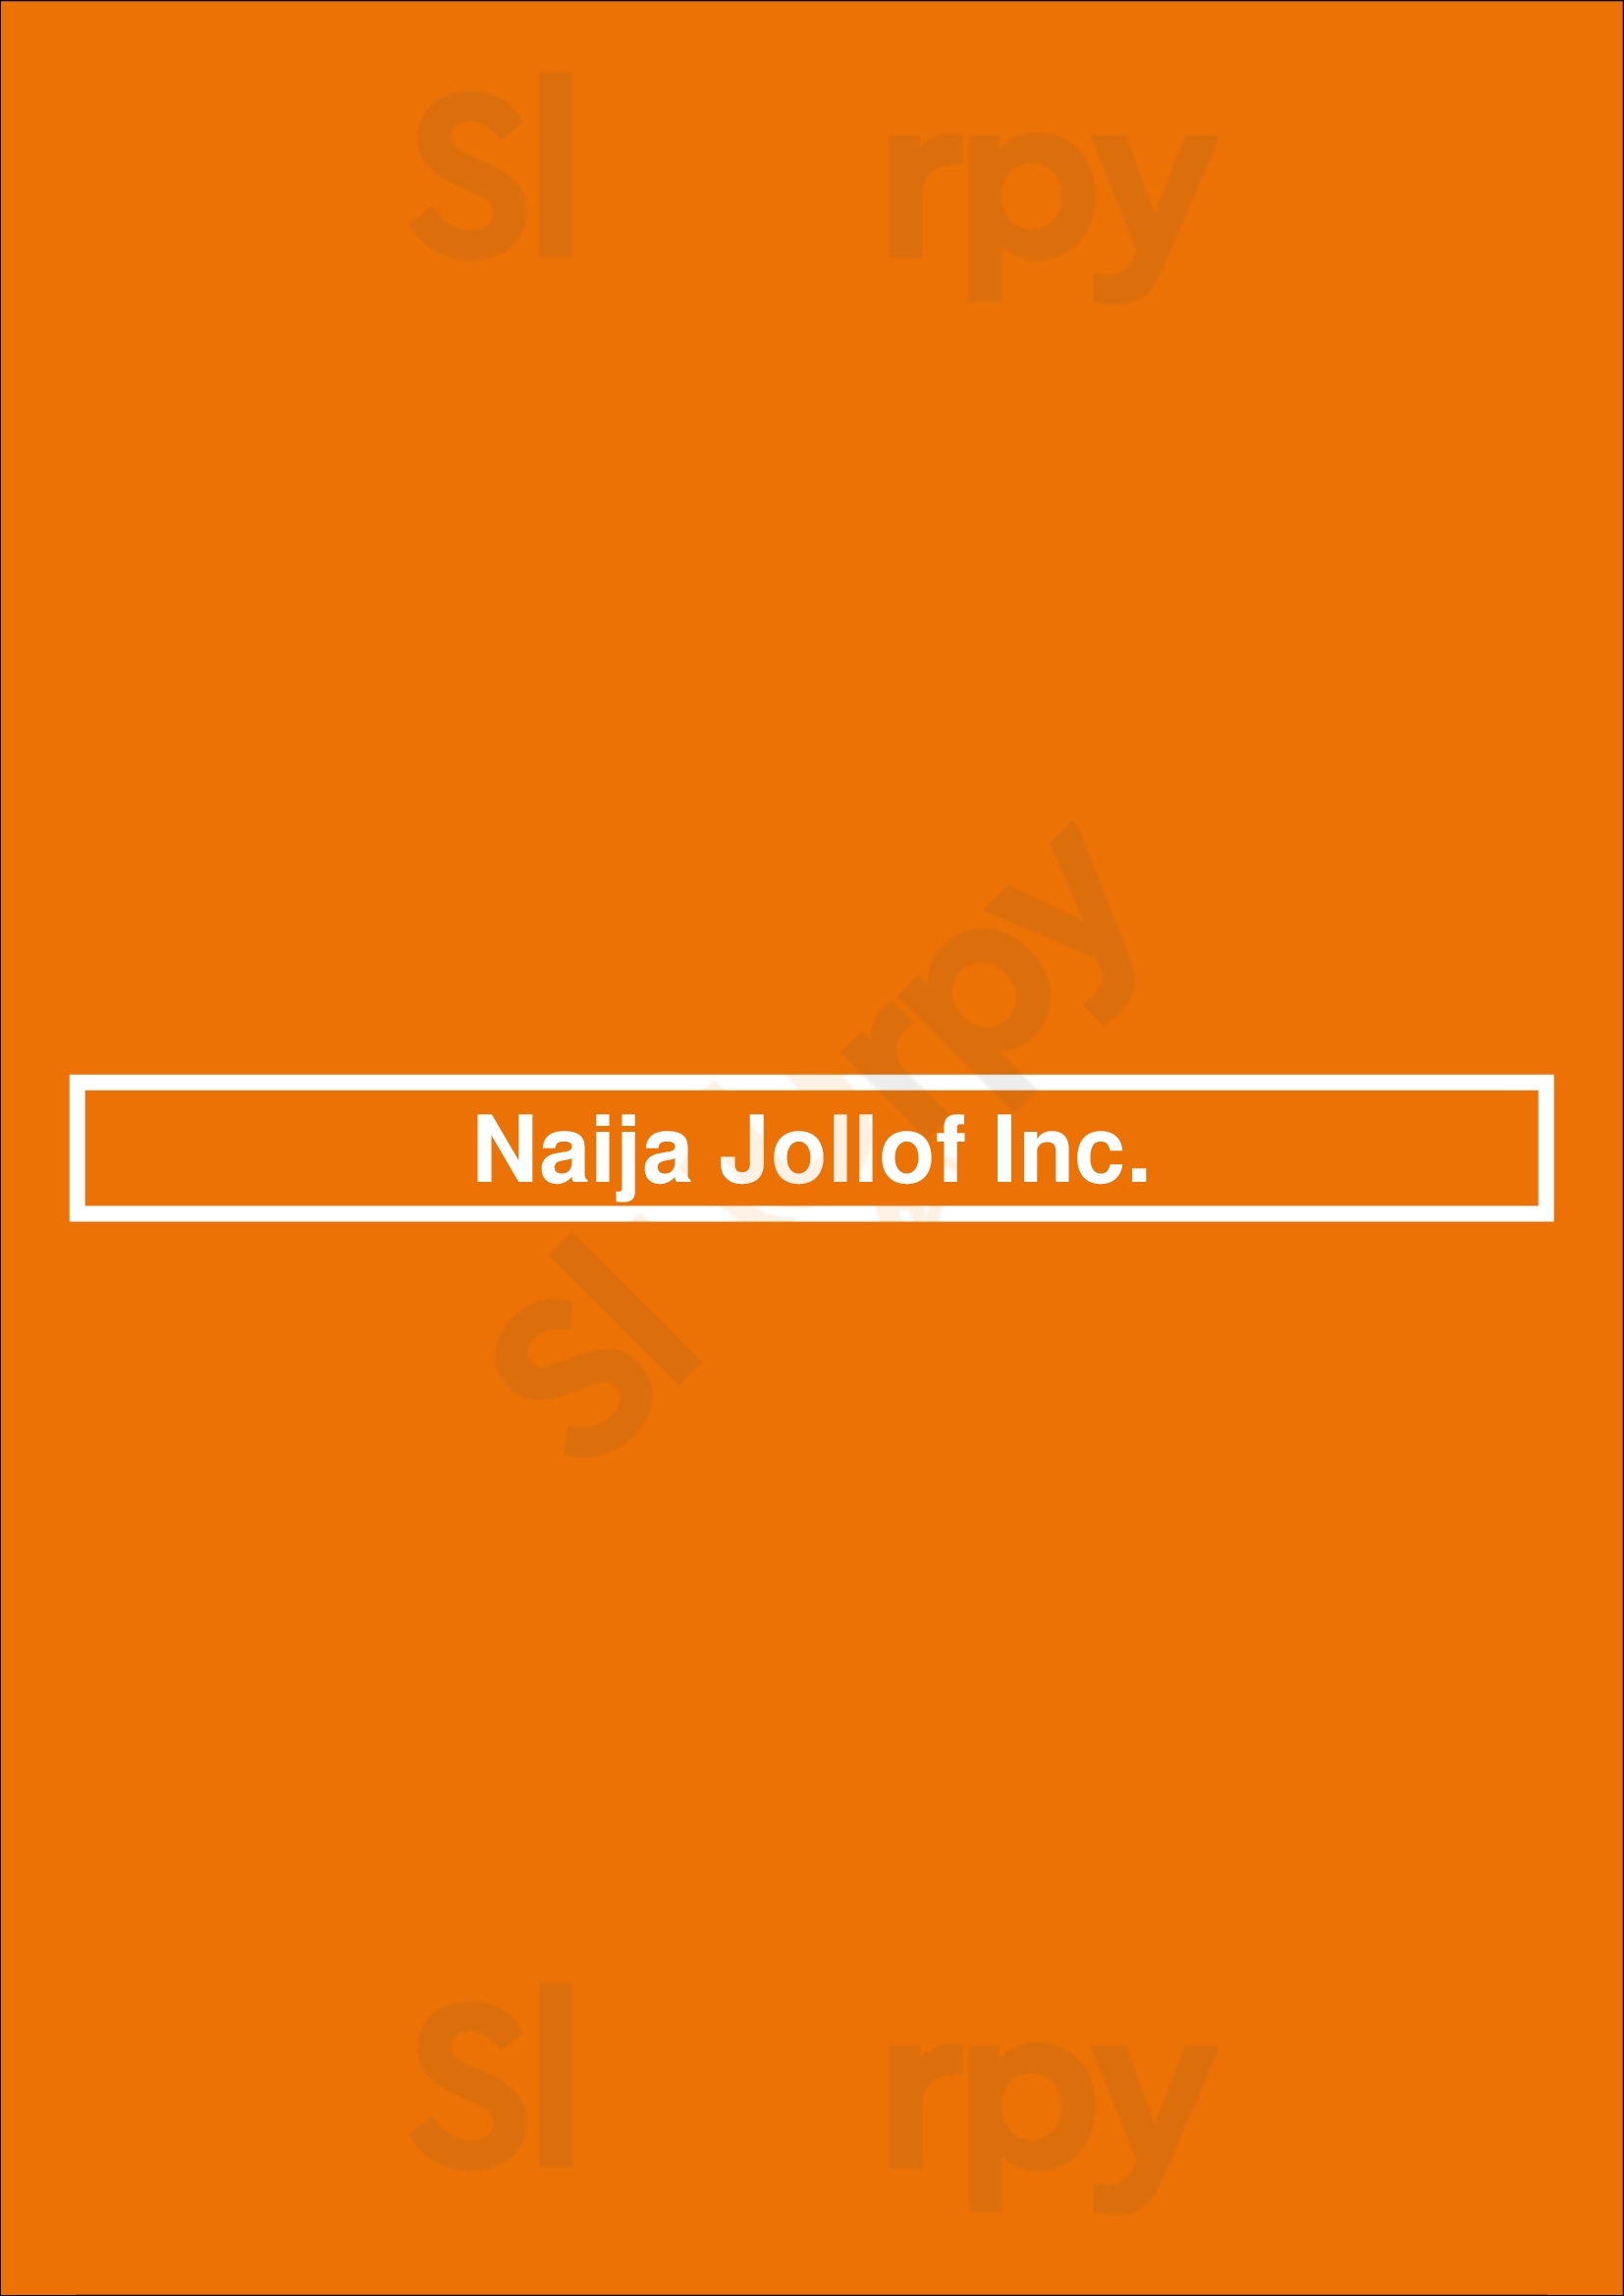 Naija Jollof Inc. Mississauga Menu - 1